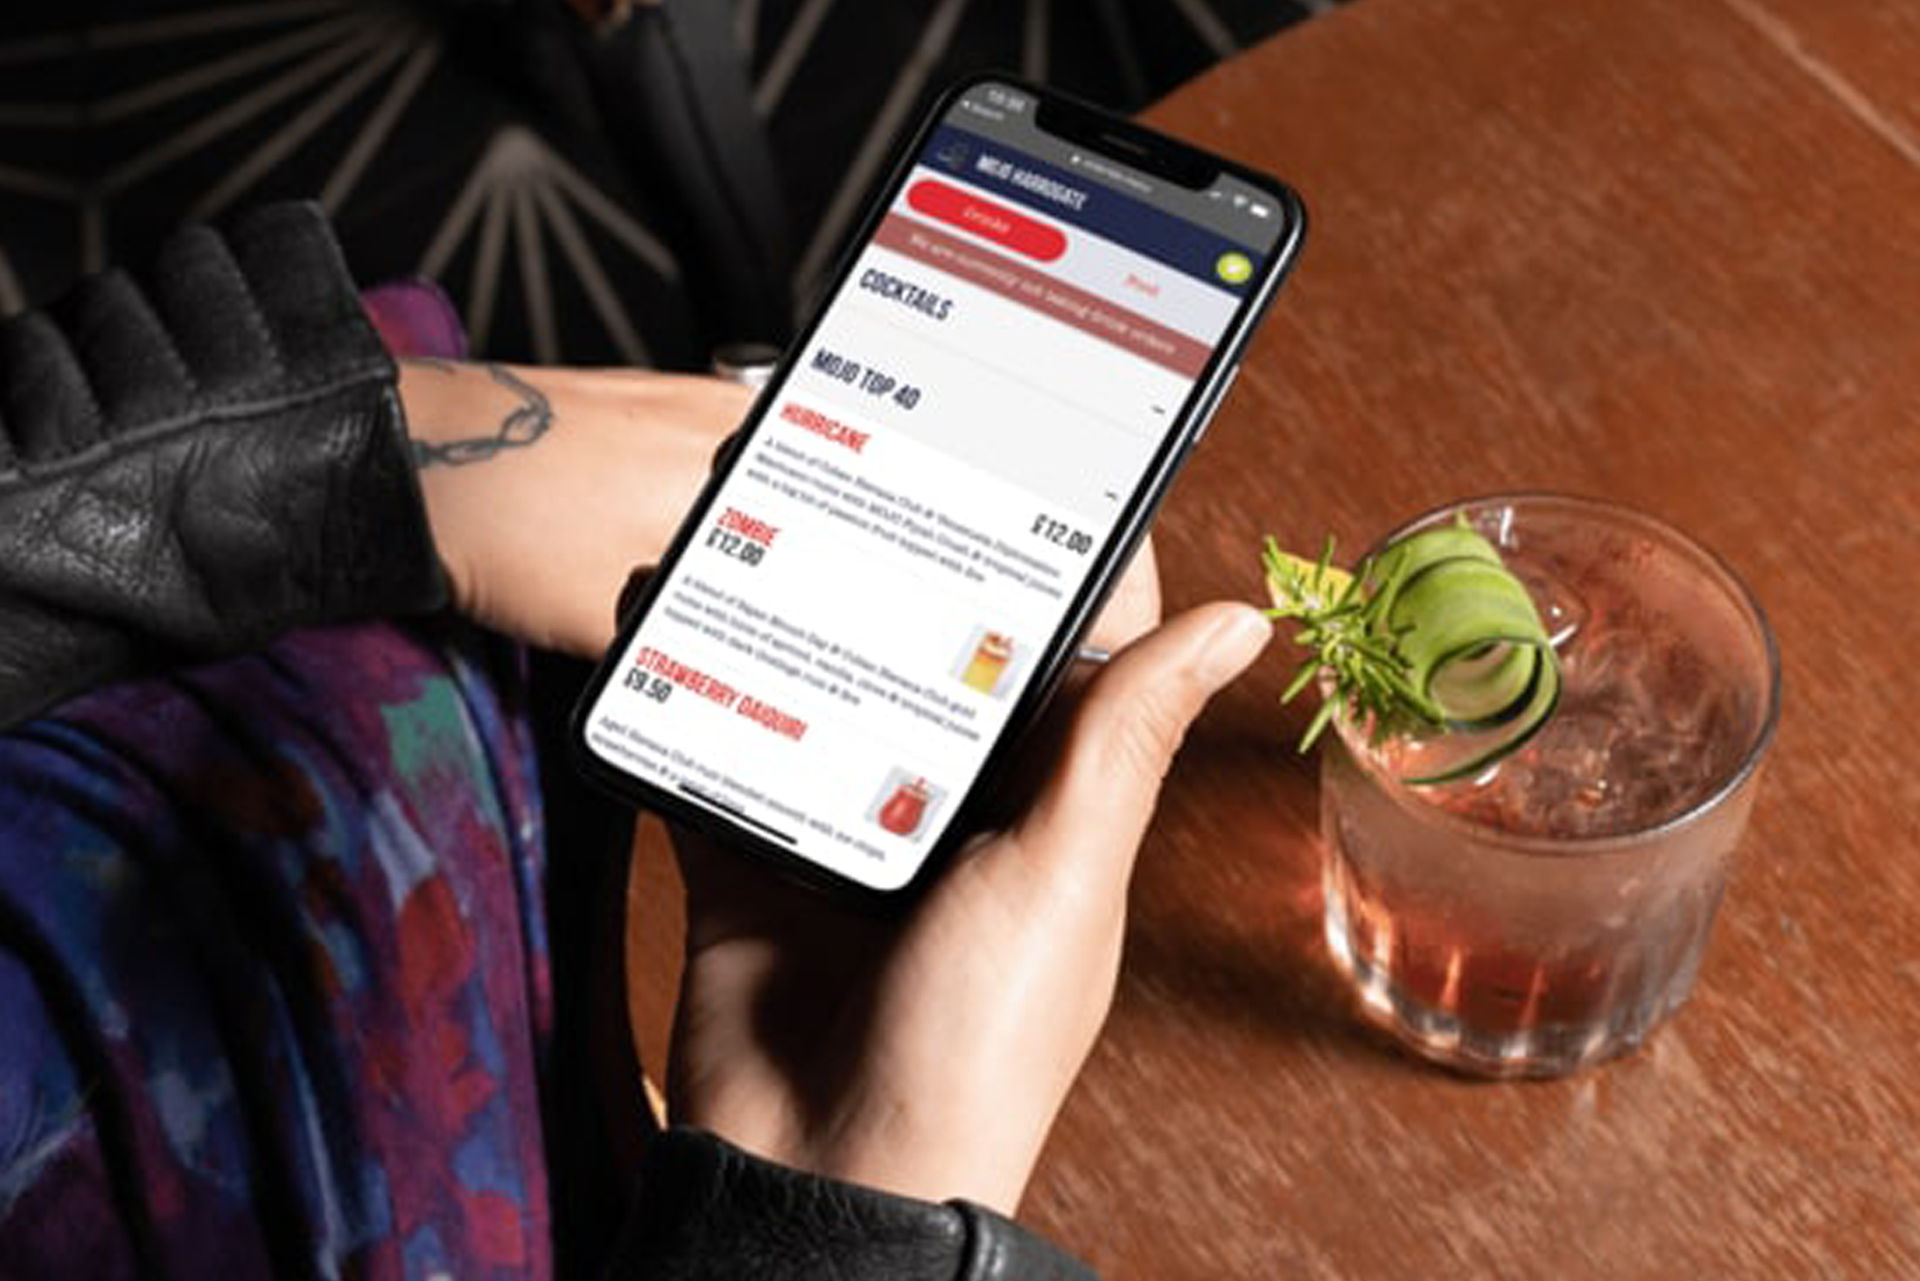 Cocktail menu on mobile ordering app